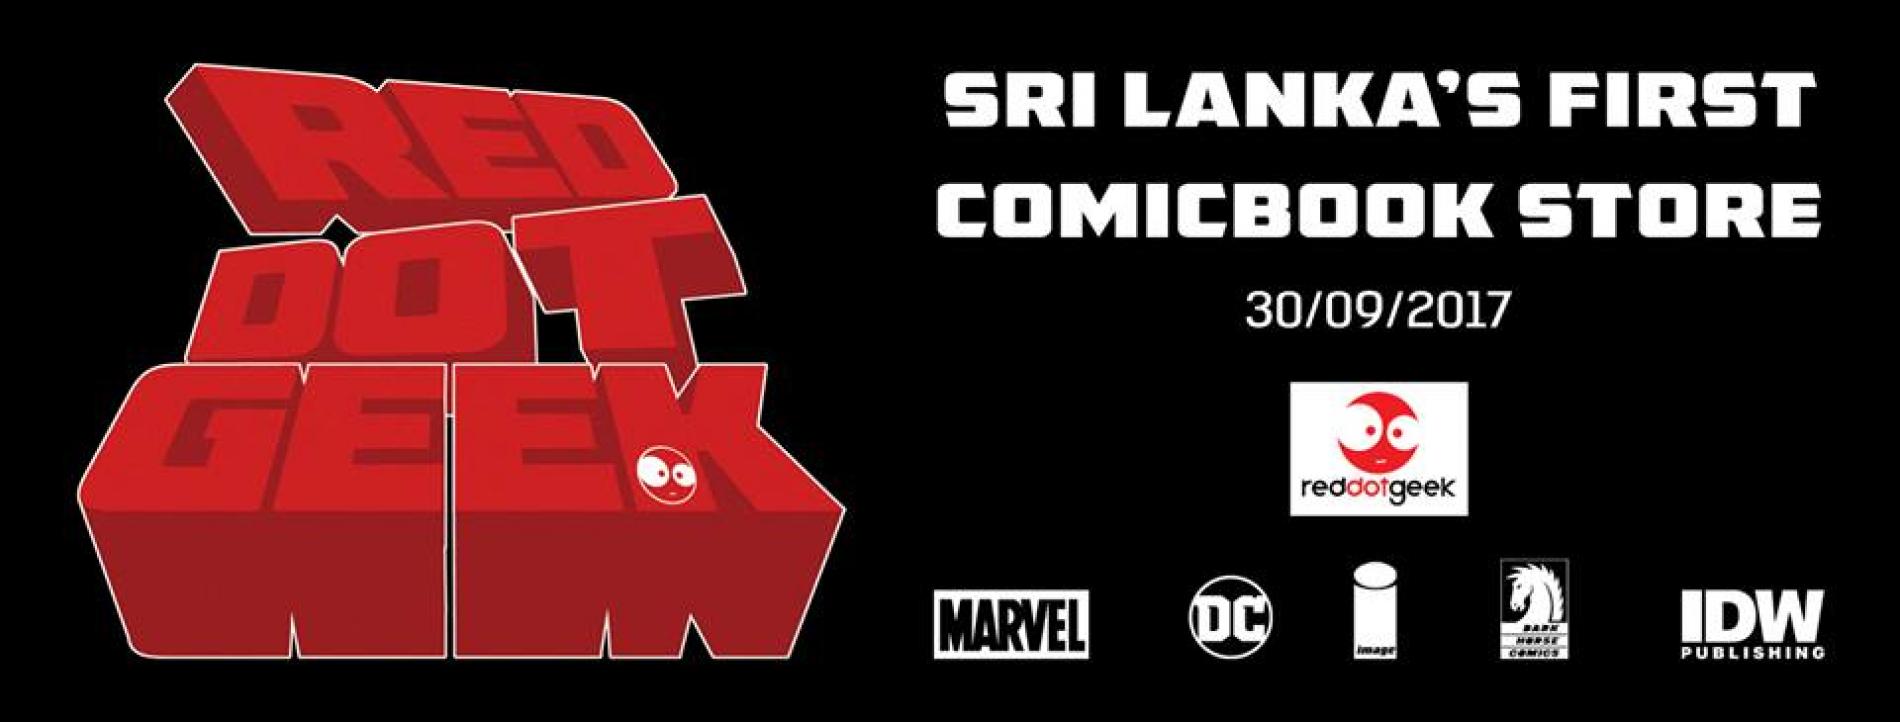 Opening First Comic Book Store in Sri Lanka